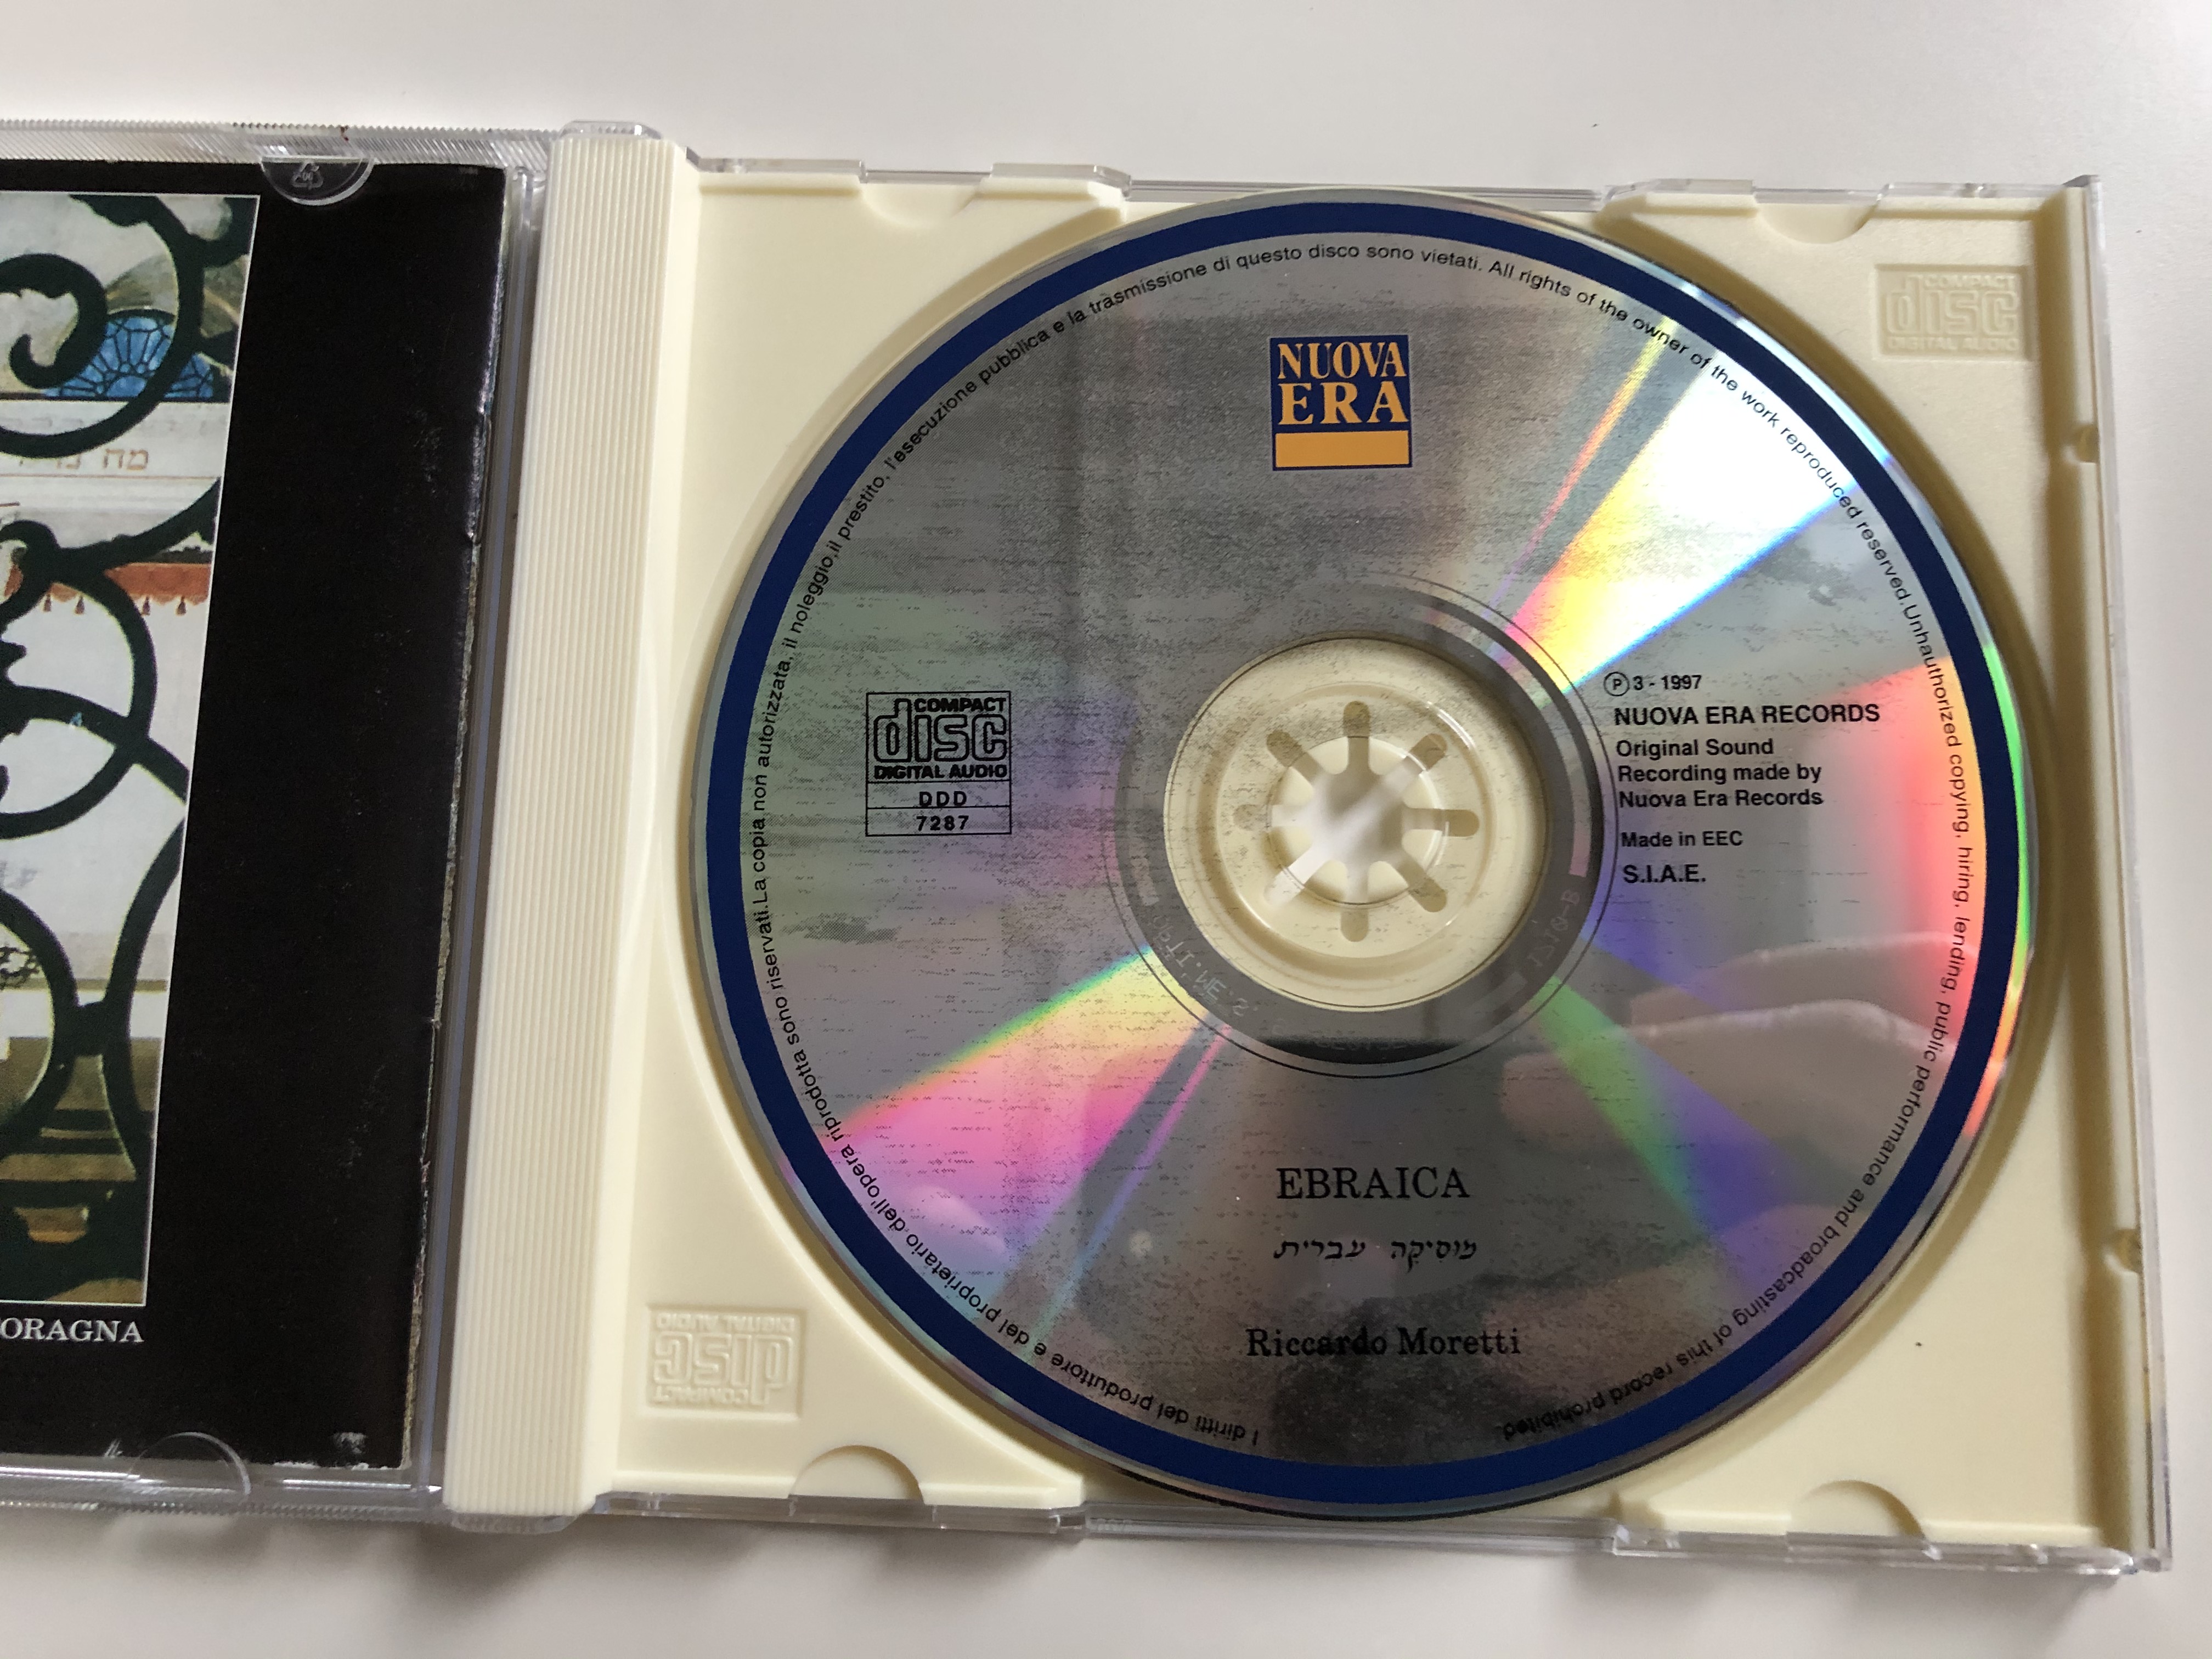 ebraica-riccardo-moretti-nuova-era-audio-cd-1997-7287-11-.jpg